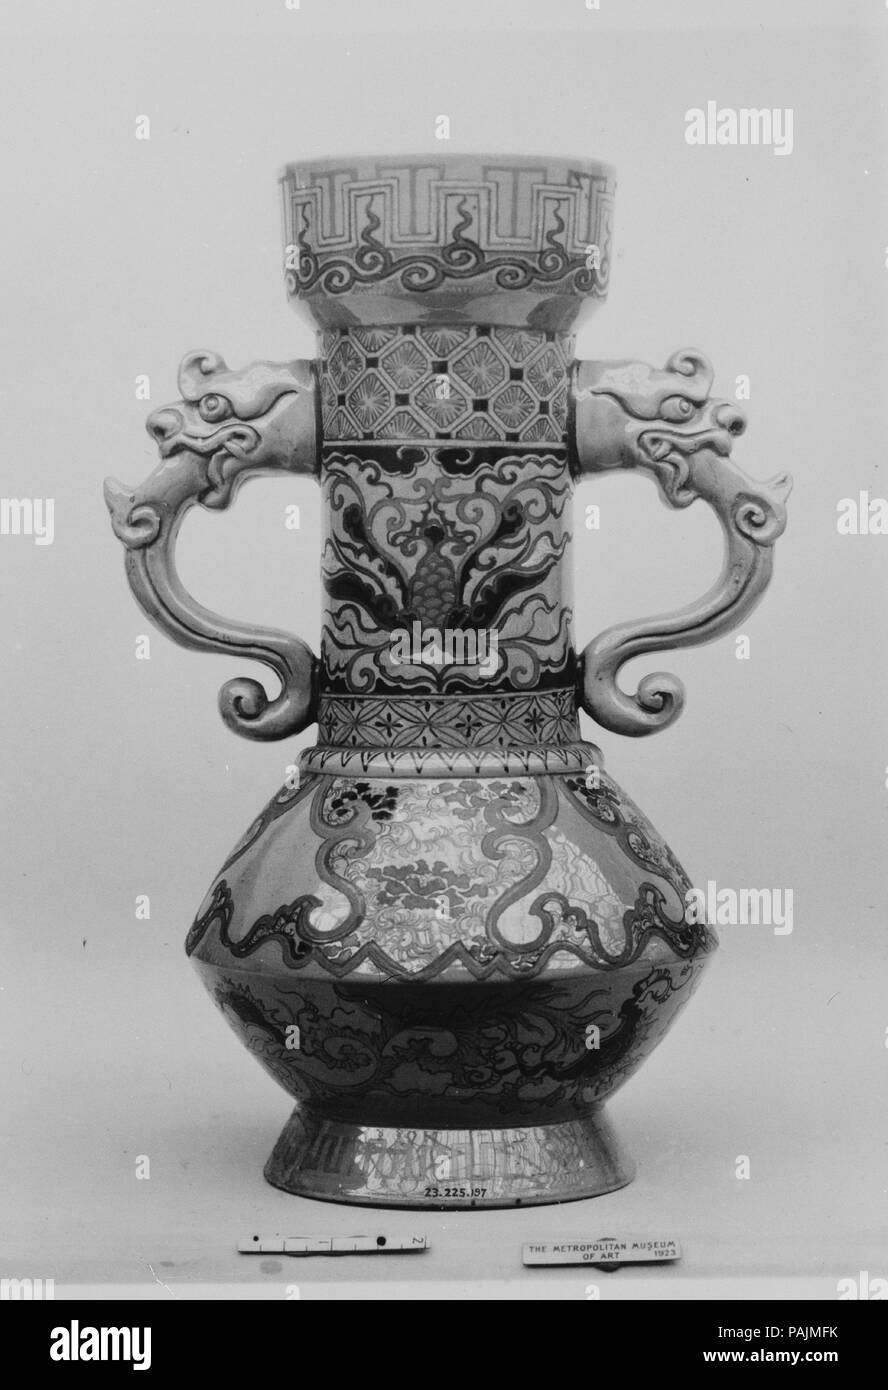 Vaso. Cultura: il Giappone. Dimensioni: H. 12 a. (30,5 cm); Diam. 8 a. (20,3 cm). Data: 1825. Museo: Metropolitan Museum of Art di New York, Stati Uniti d'America. Foto Stock